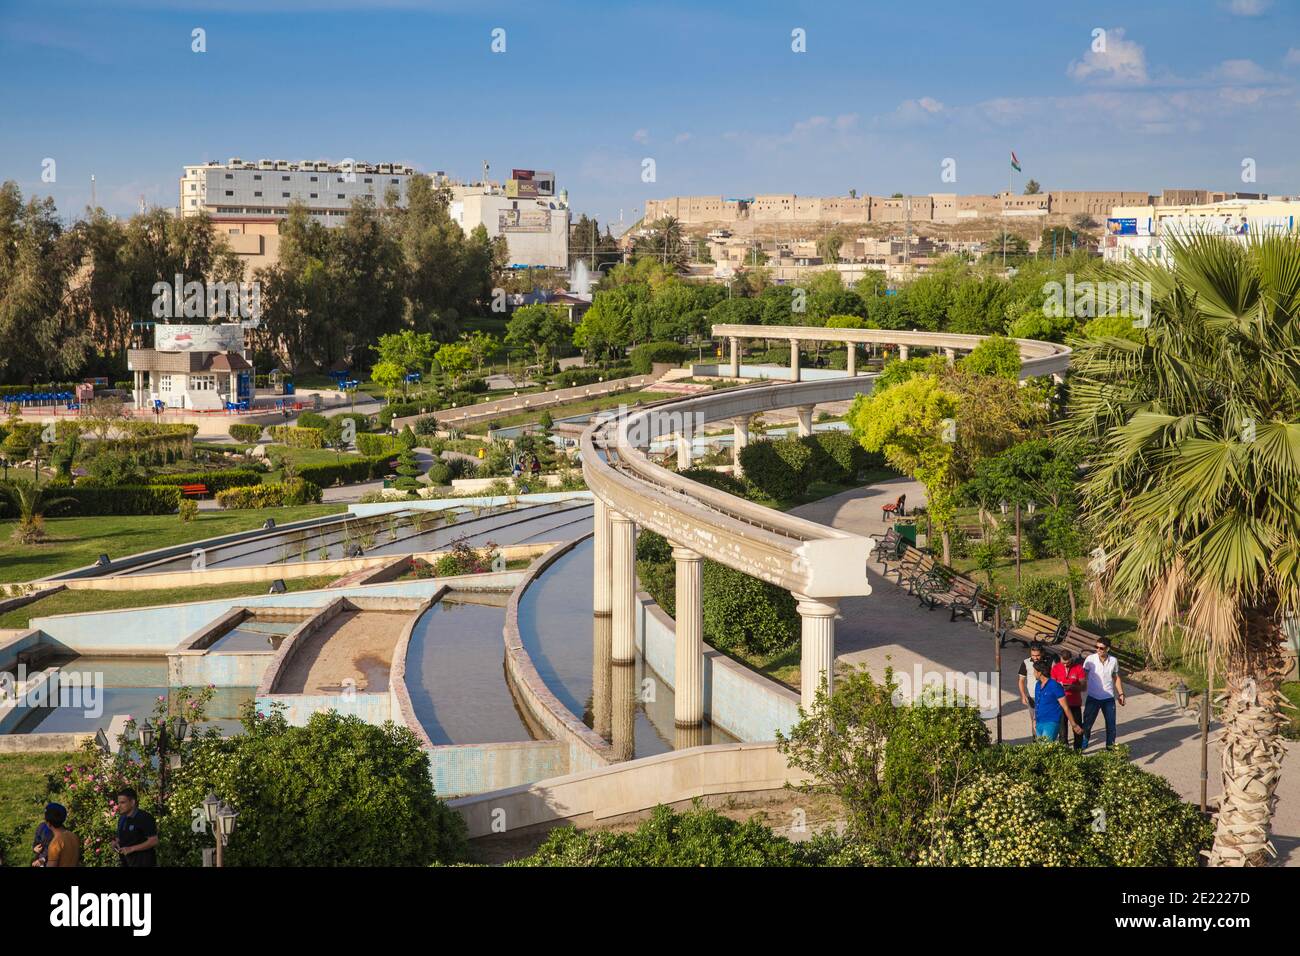 Iraq, Kurdistan, Erbil, Ariel view of Minare Park Stock Photo